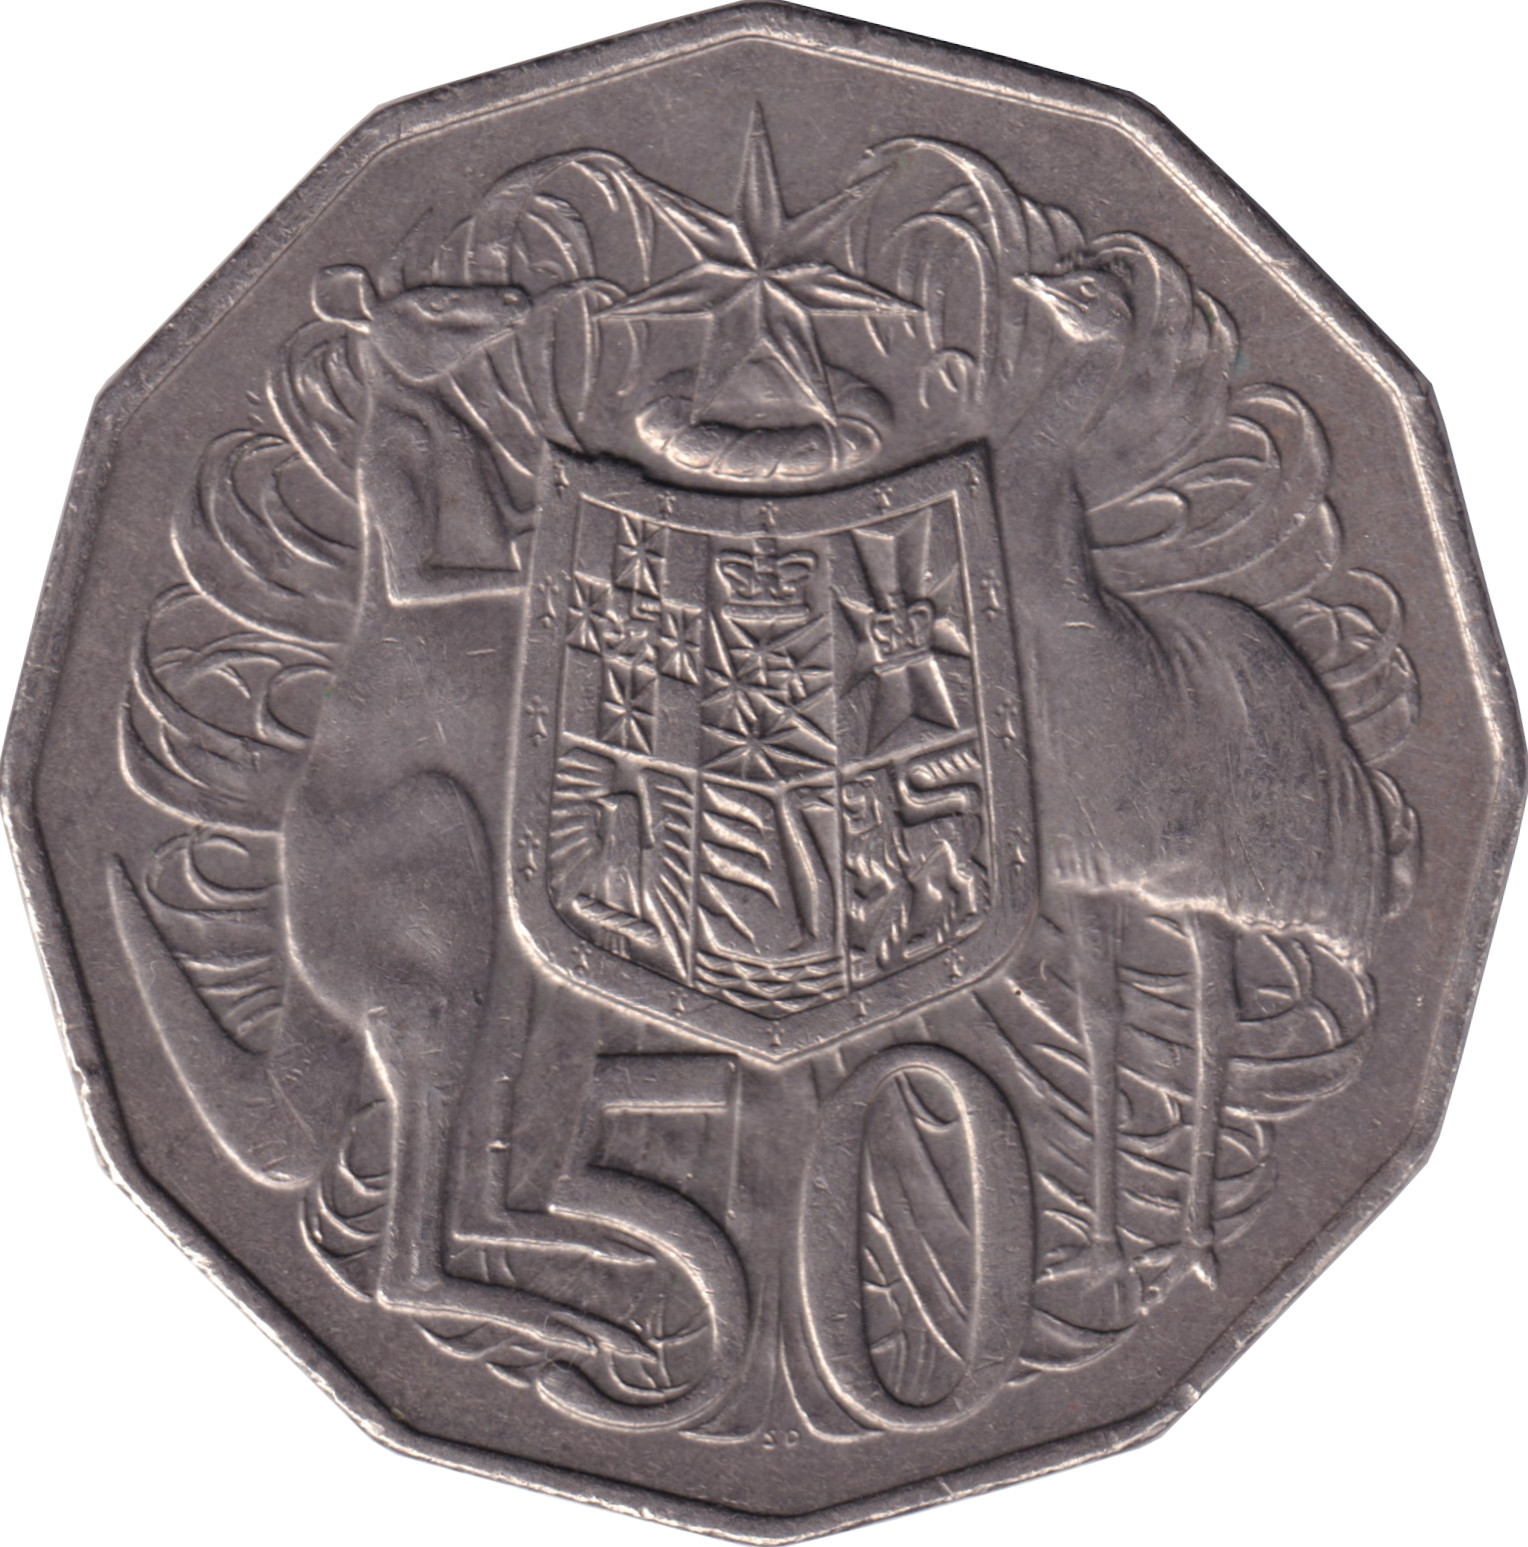 50 cents - Elizabeth II - Mature bust